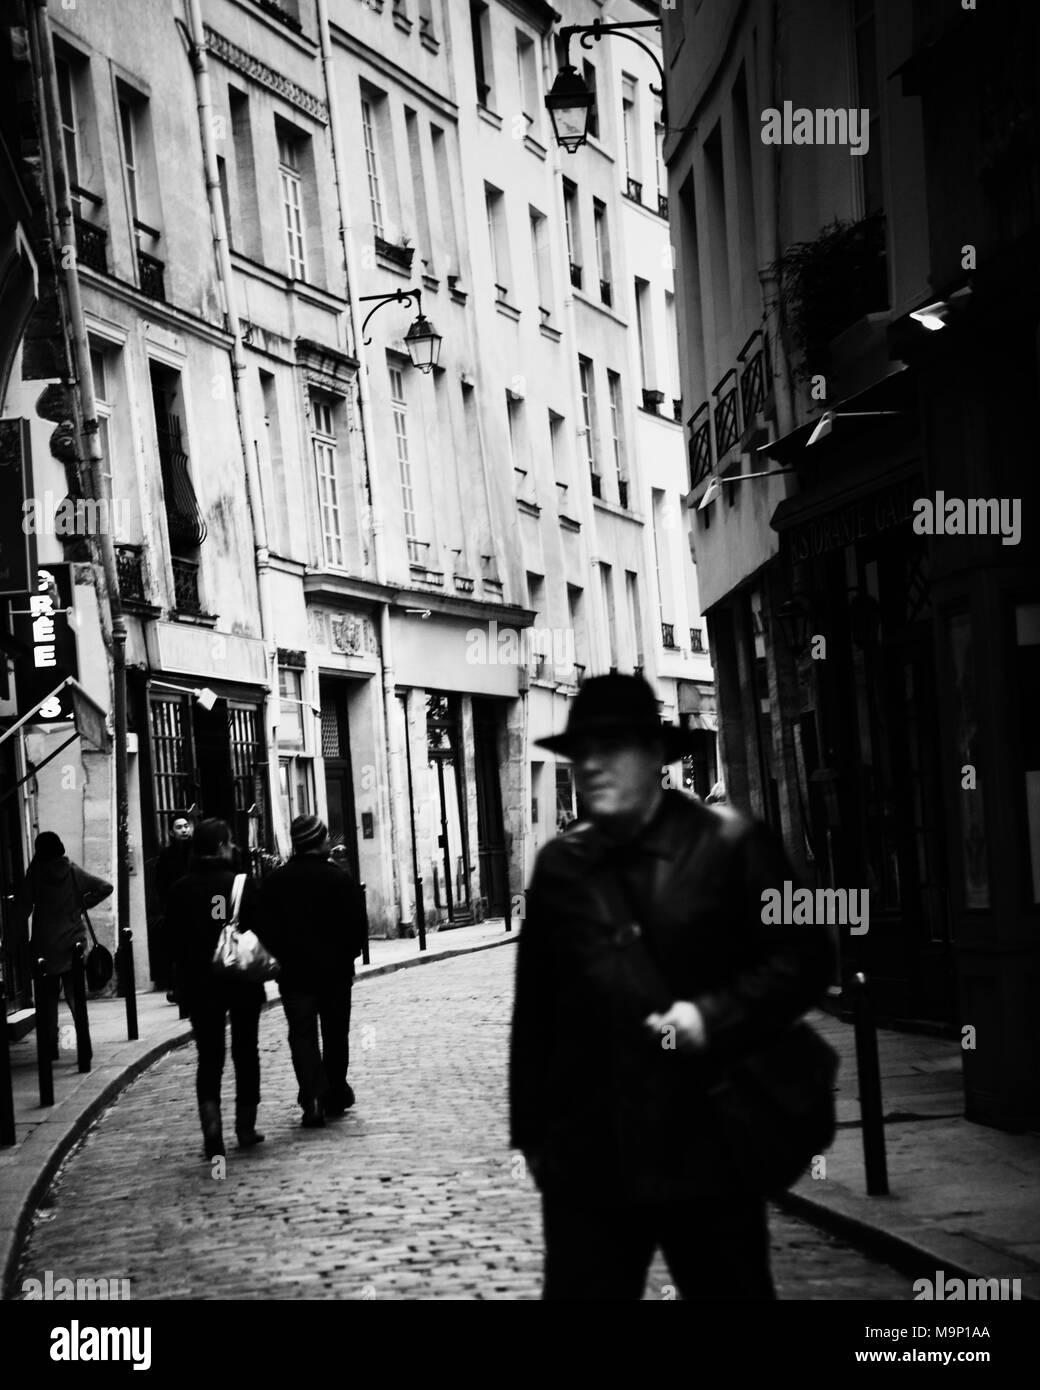 Típica estrecha calle de adoquines en París con un hombre en primer plano. Foto de stock